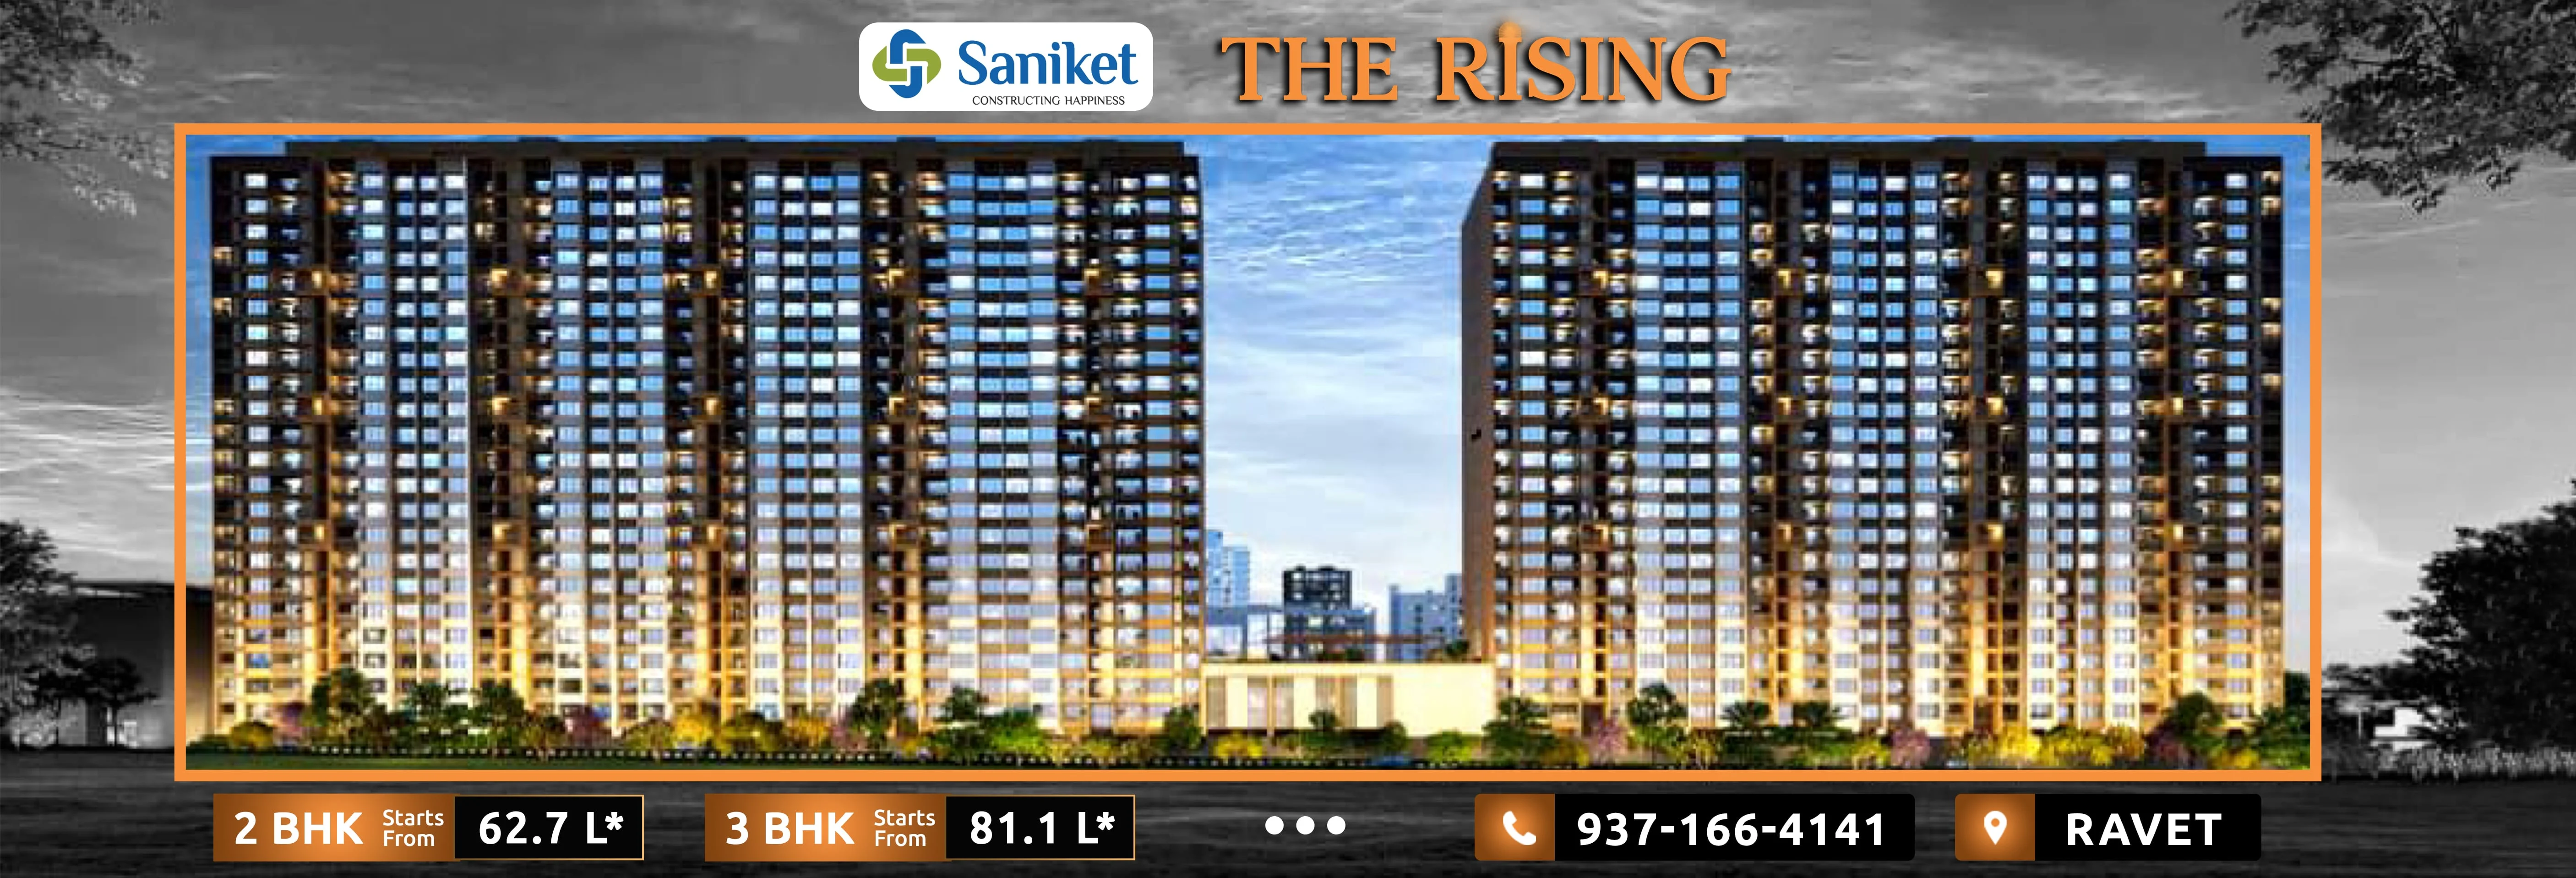 Saniket The Rising slide2